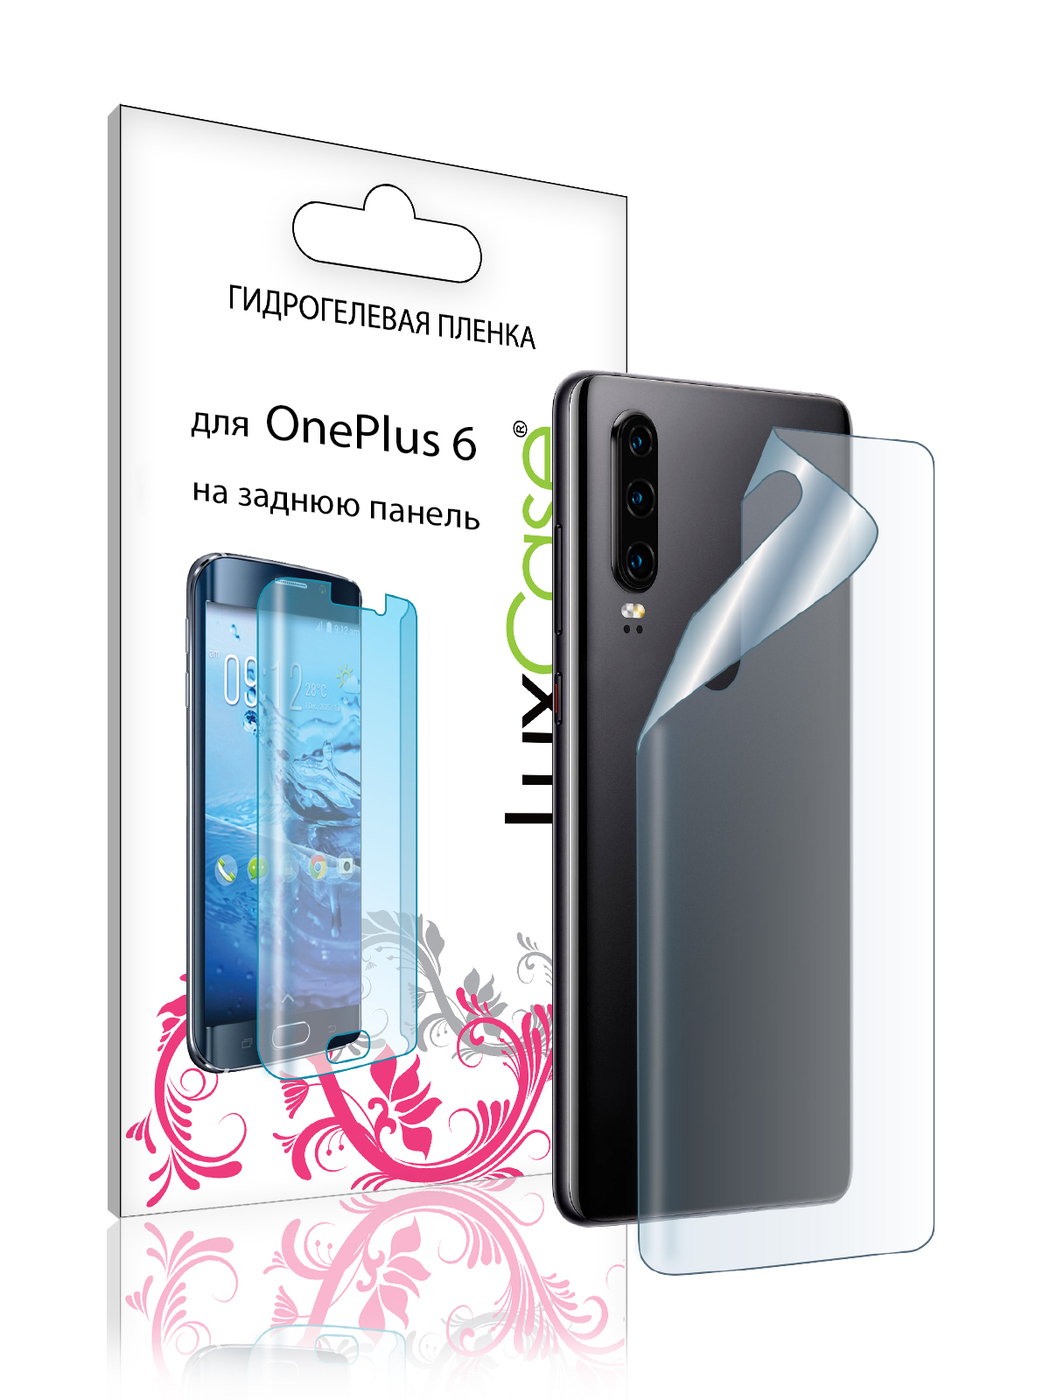 Защита задней крышки LuxCase для OnePlus 6 пленка 0.14mm Transparent 86163 цена и фото